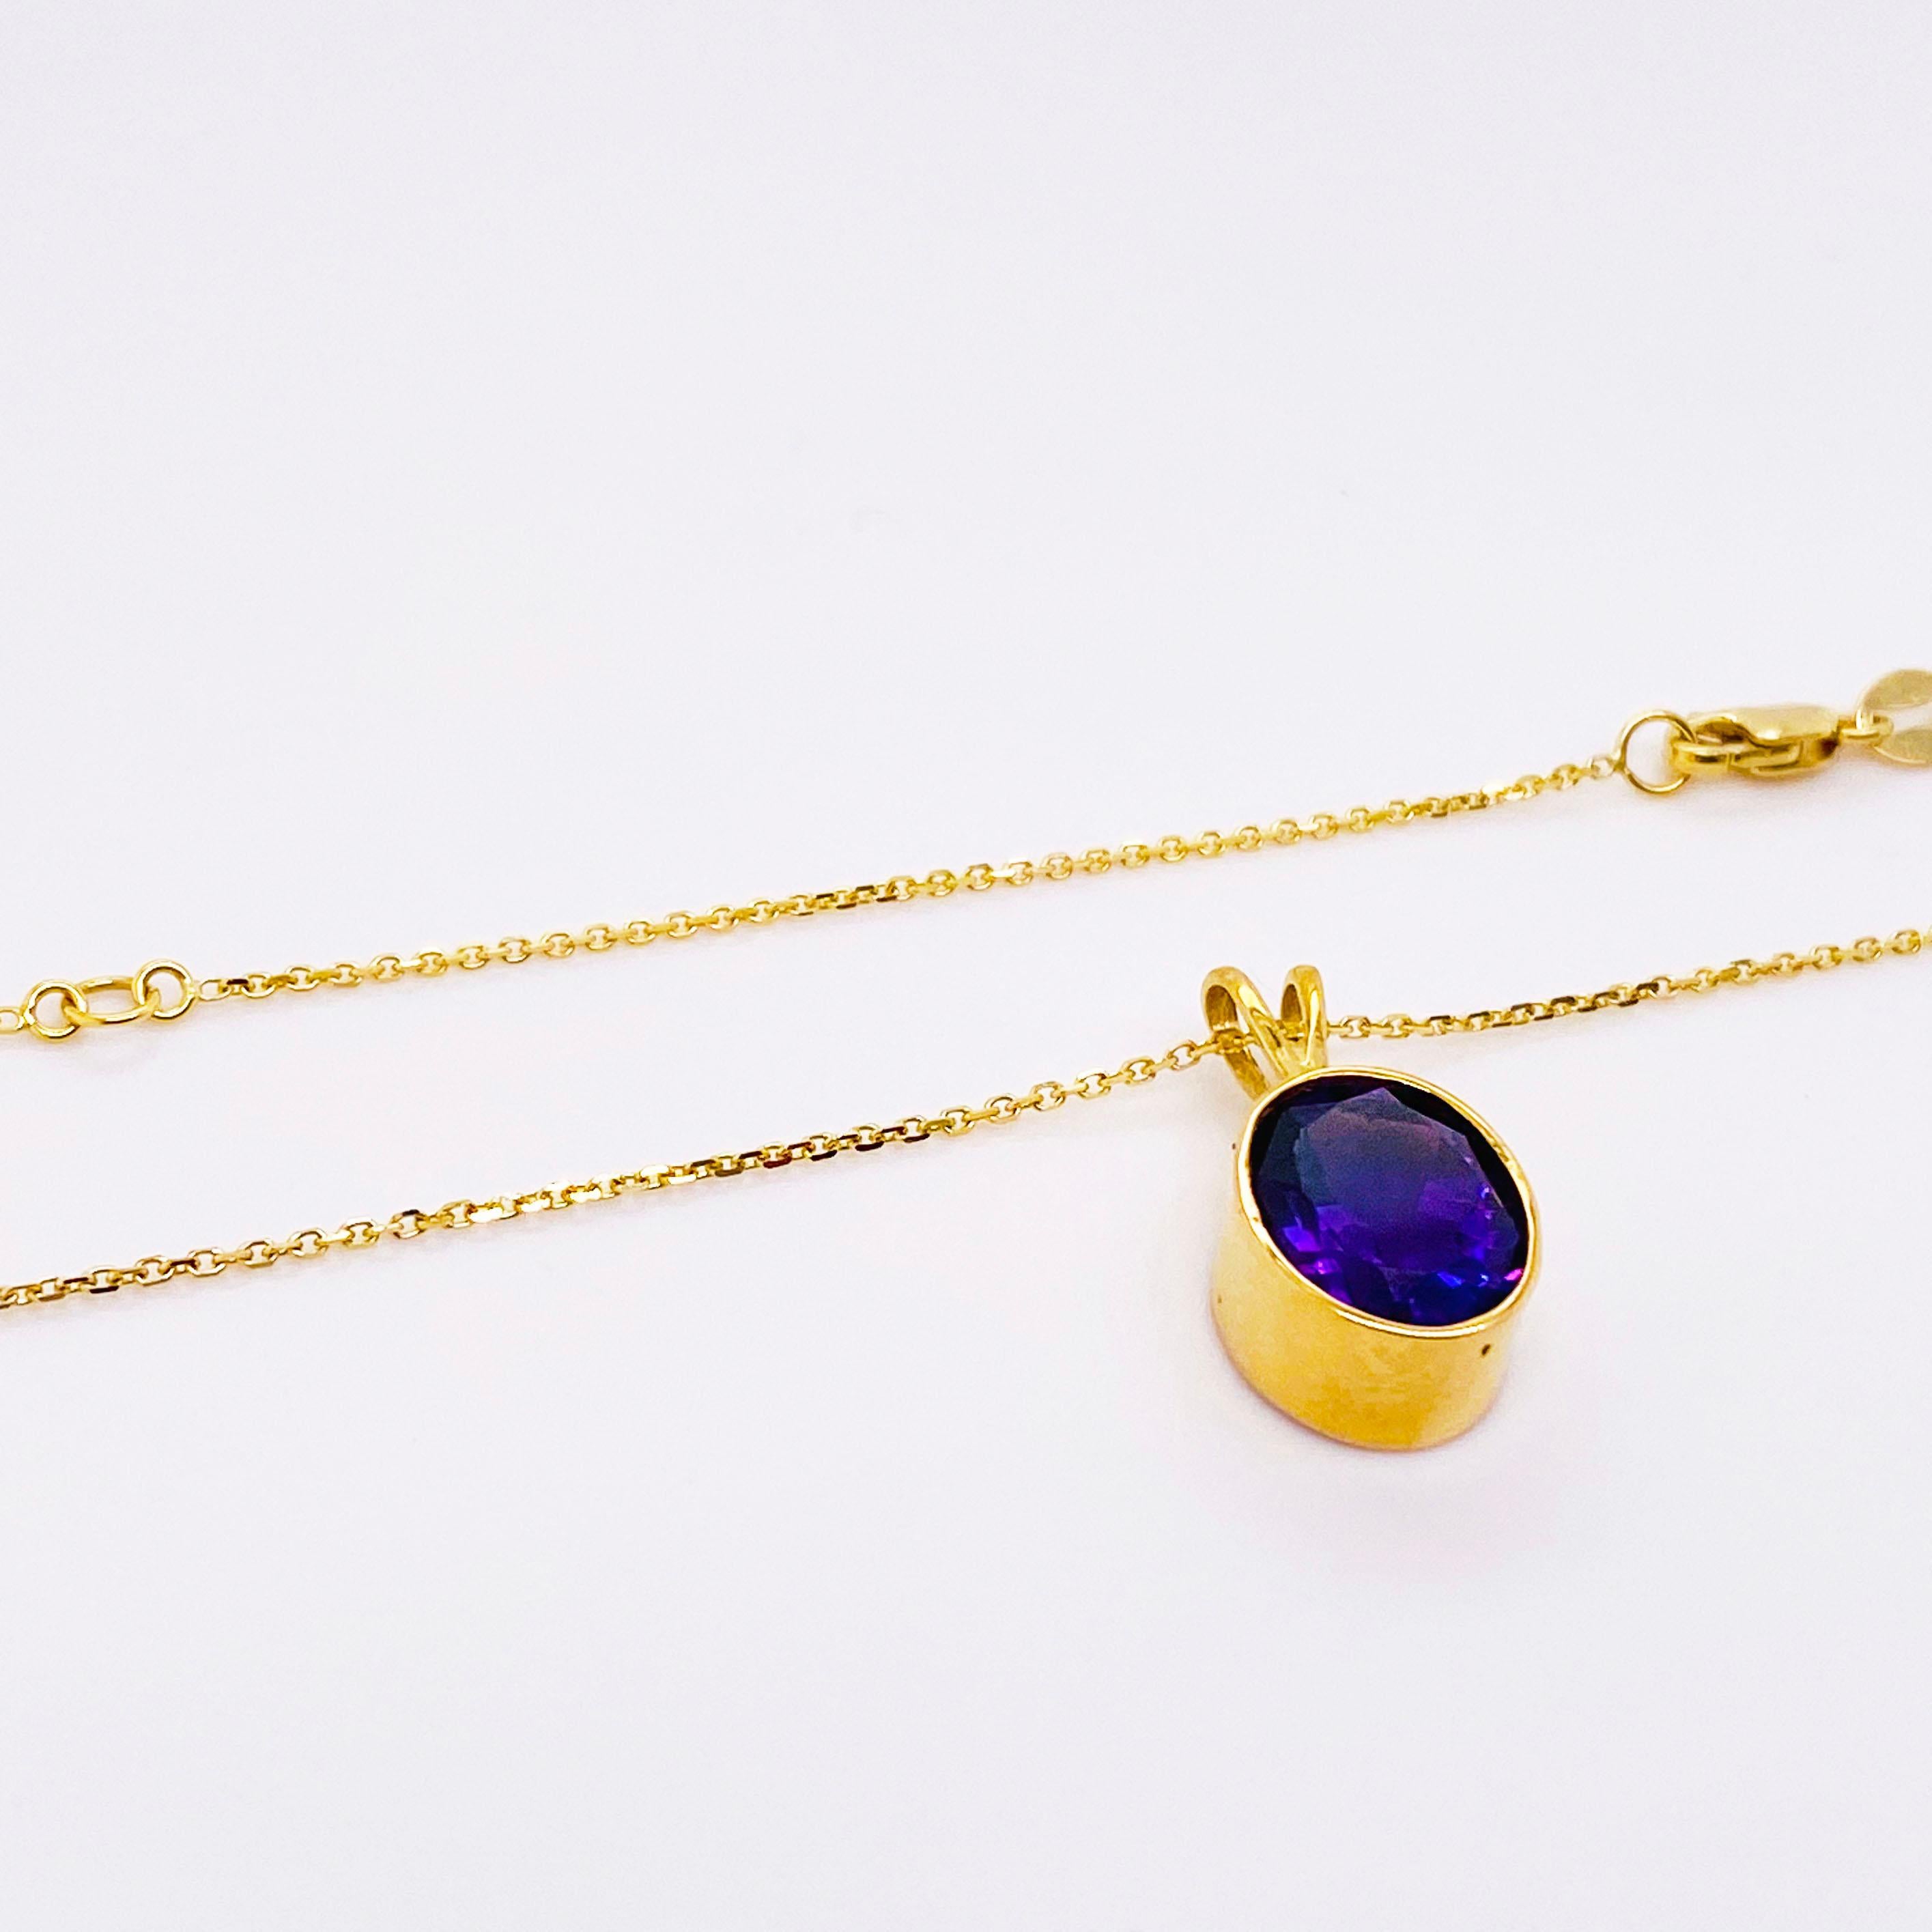 Oval Cut 14 Karat Amethyst Necklace in 14 Karat Gold Bezel with Chain, Adjustable Lengths